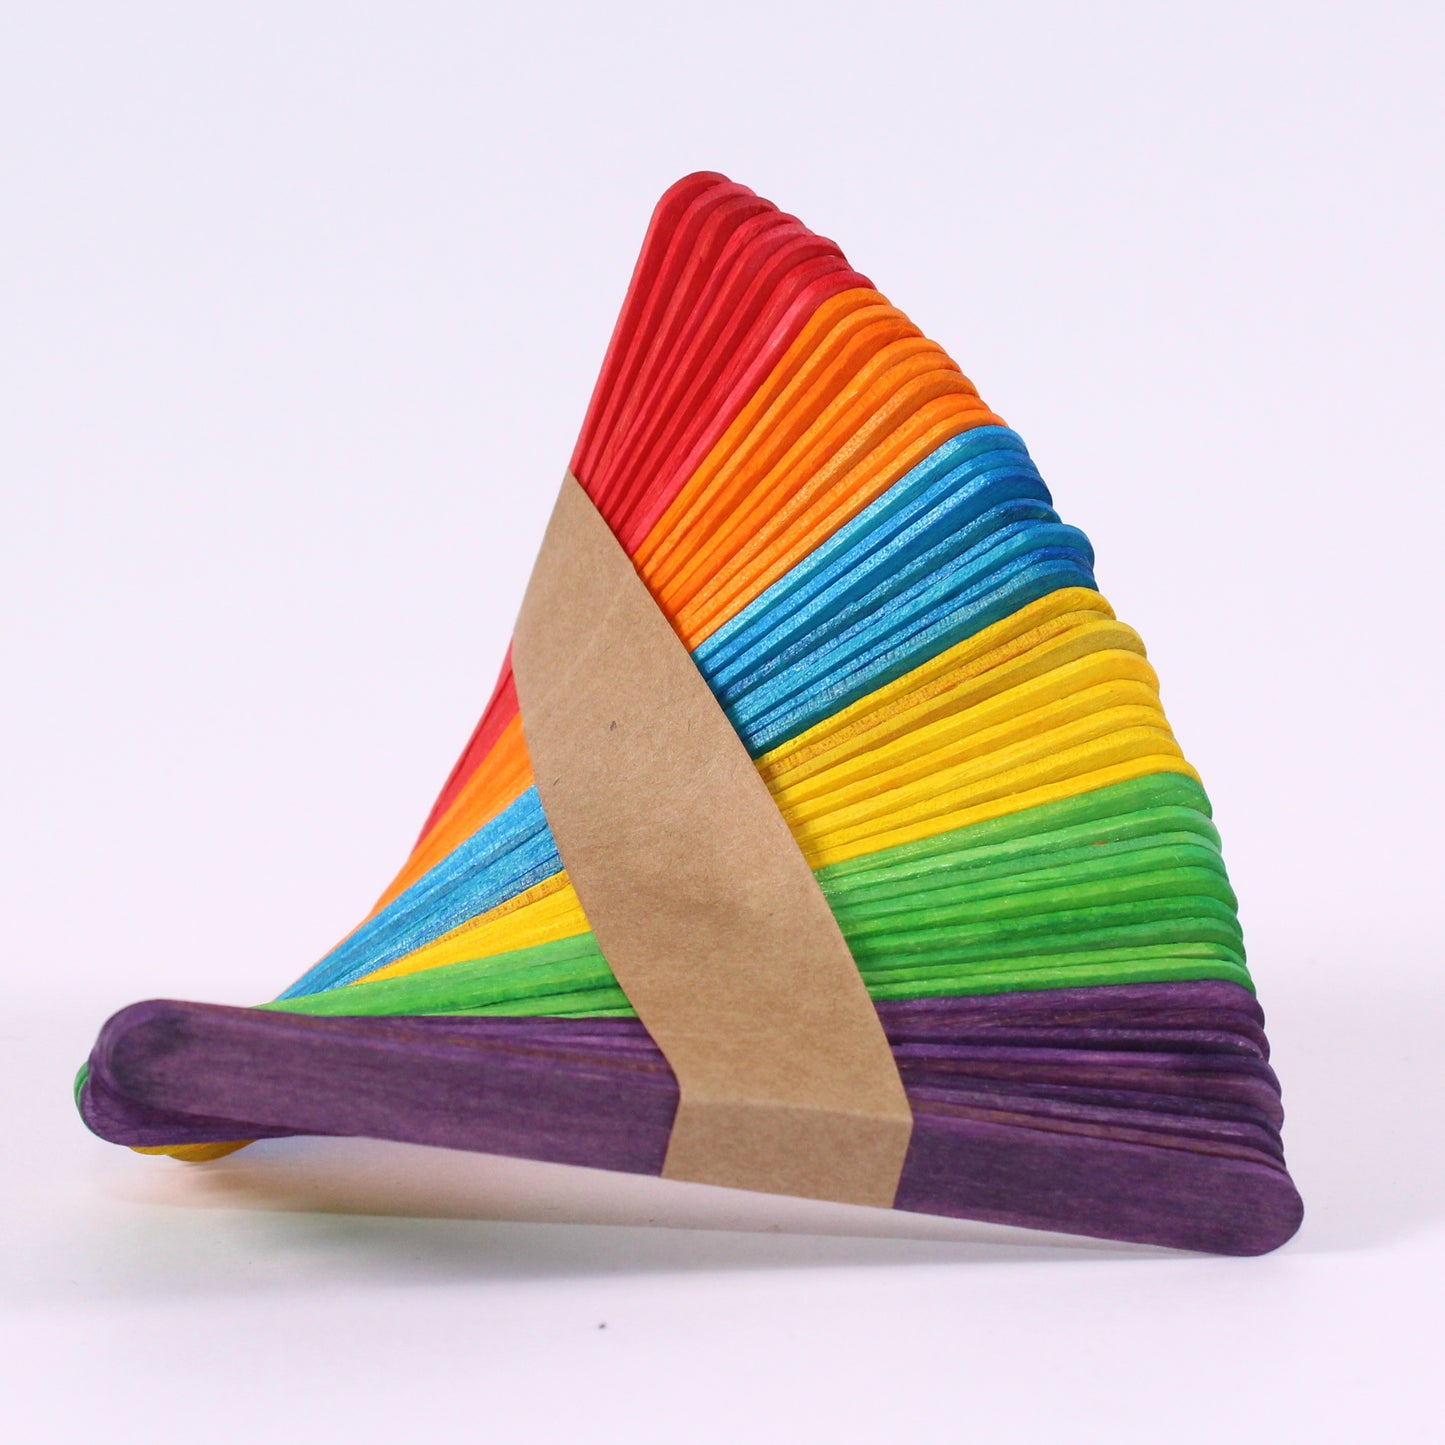 Standard Coloured Lolly Sticks 11cm X 1cm